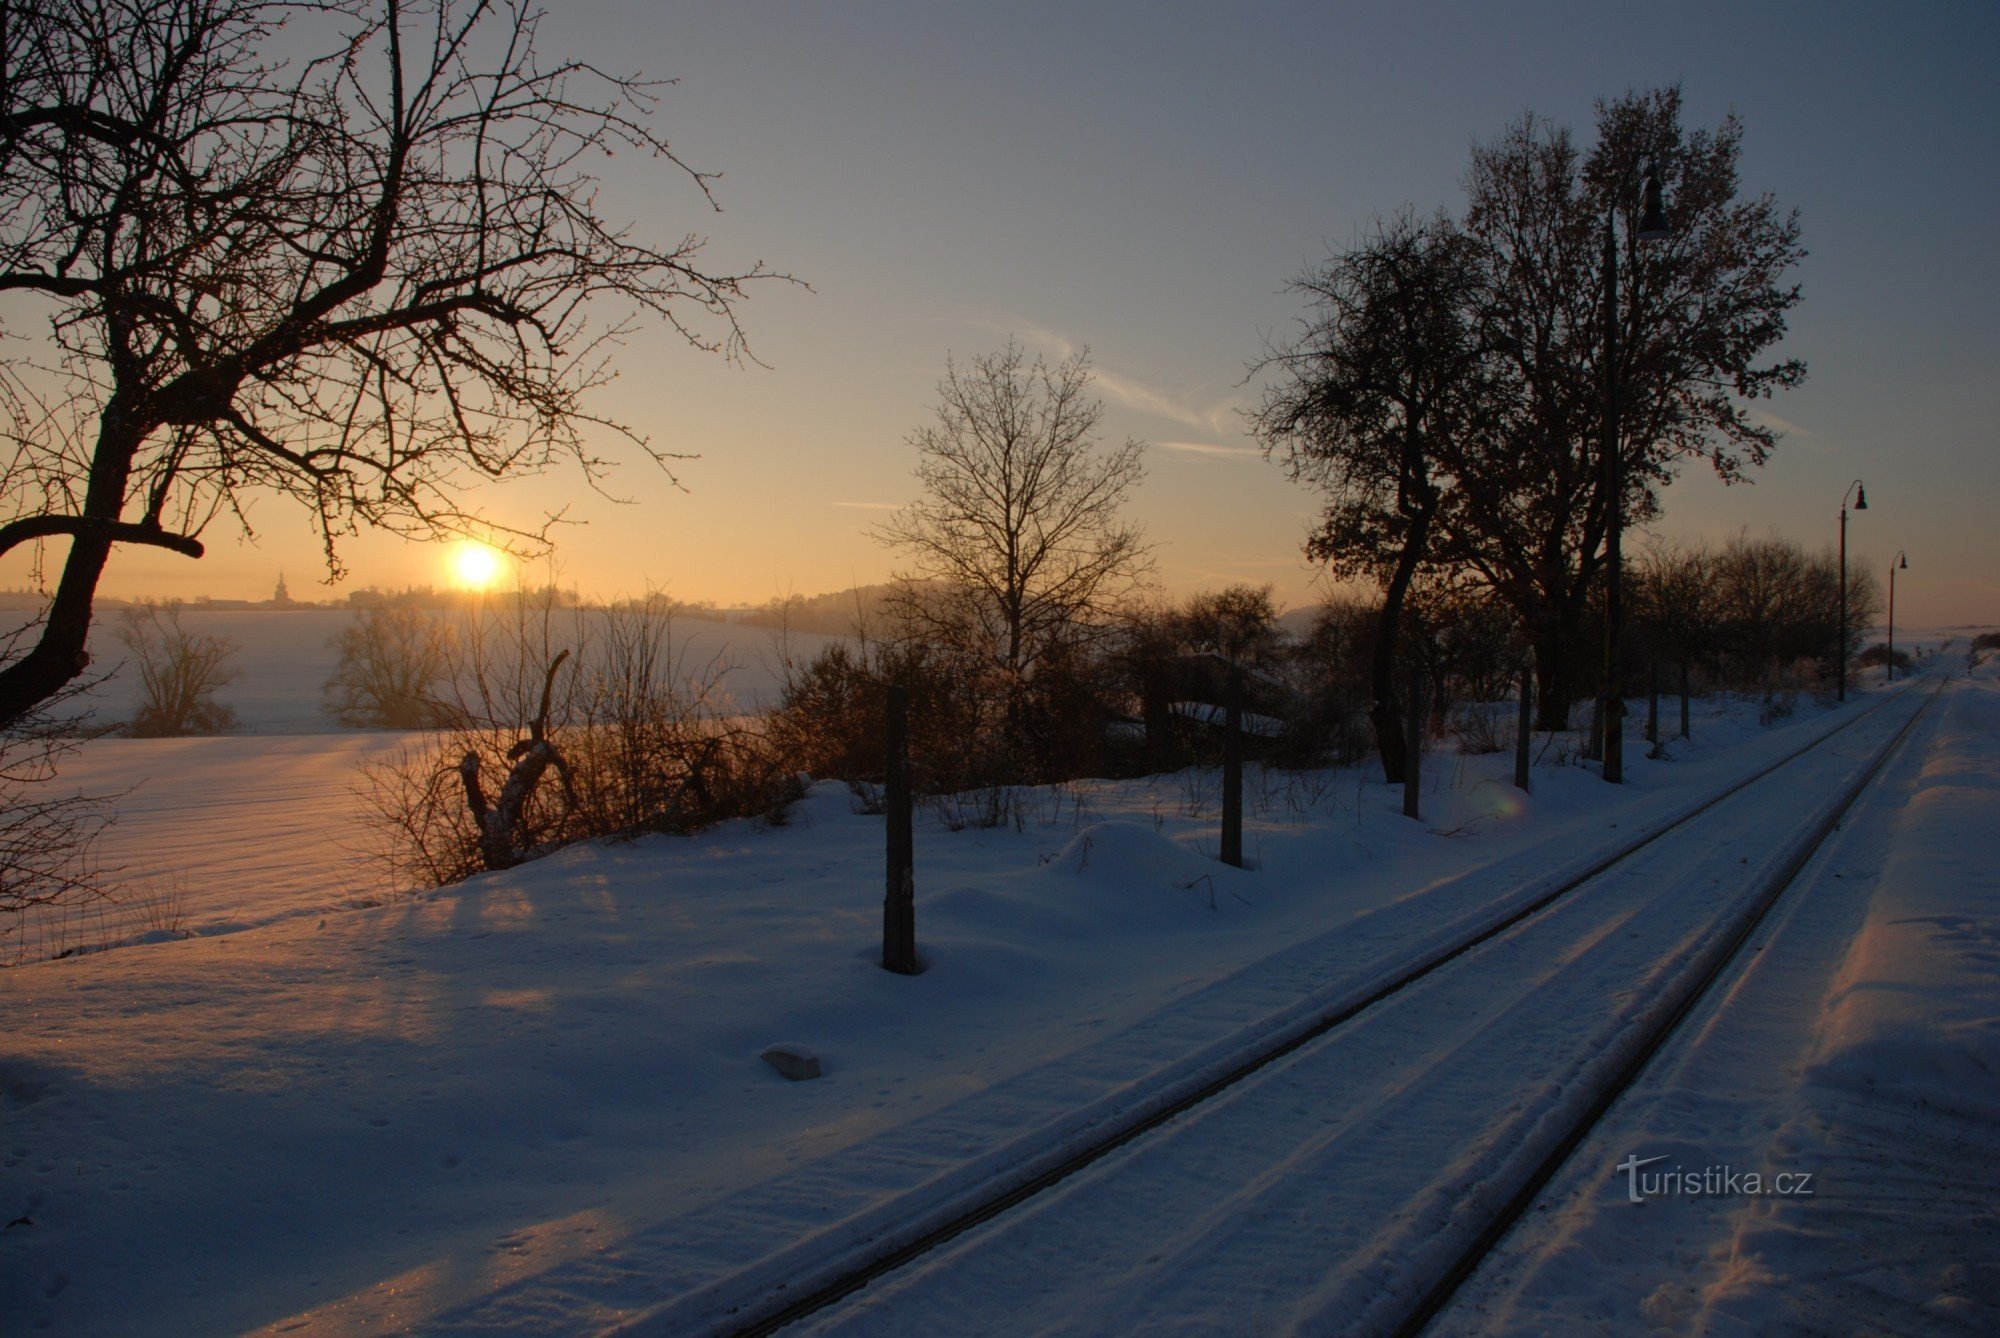 winter view from the railway station towards Bezdružice